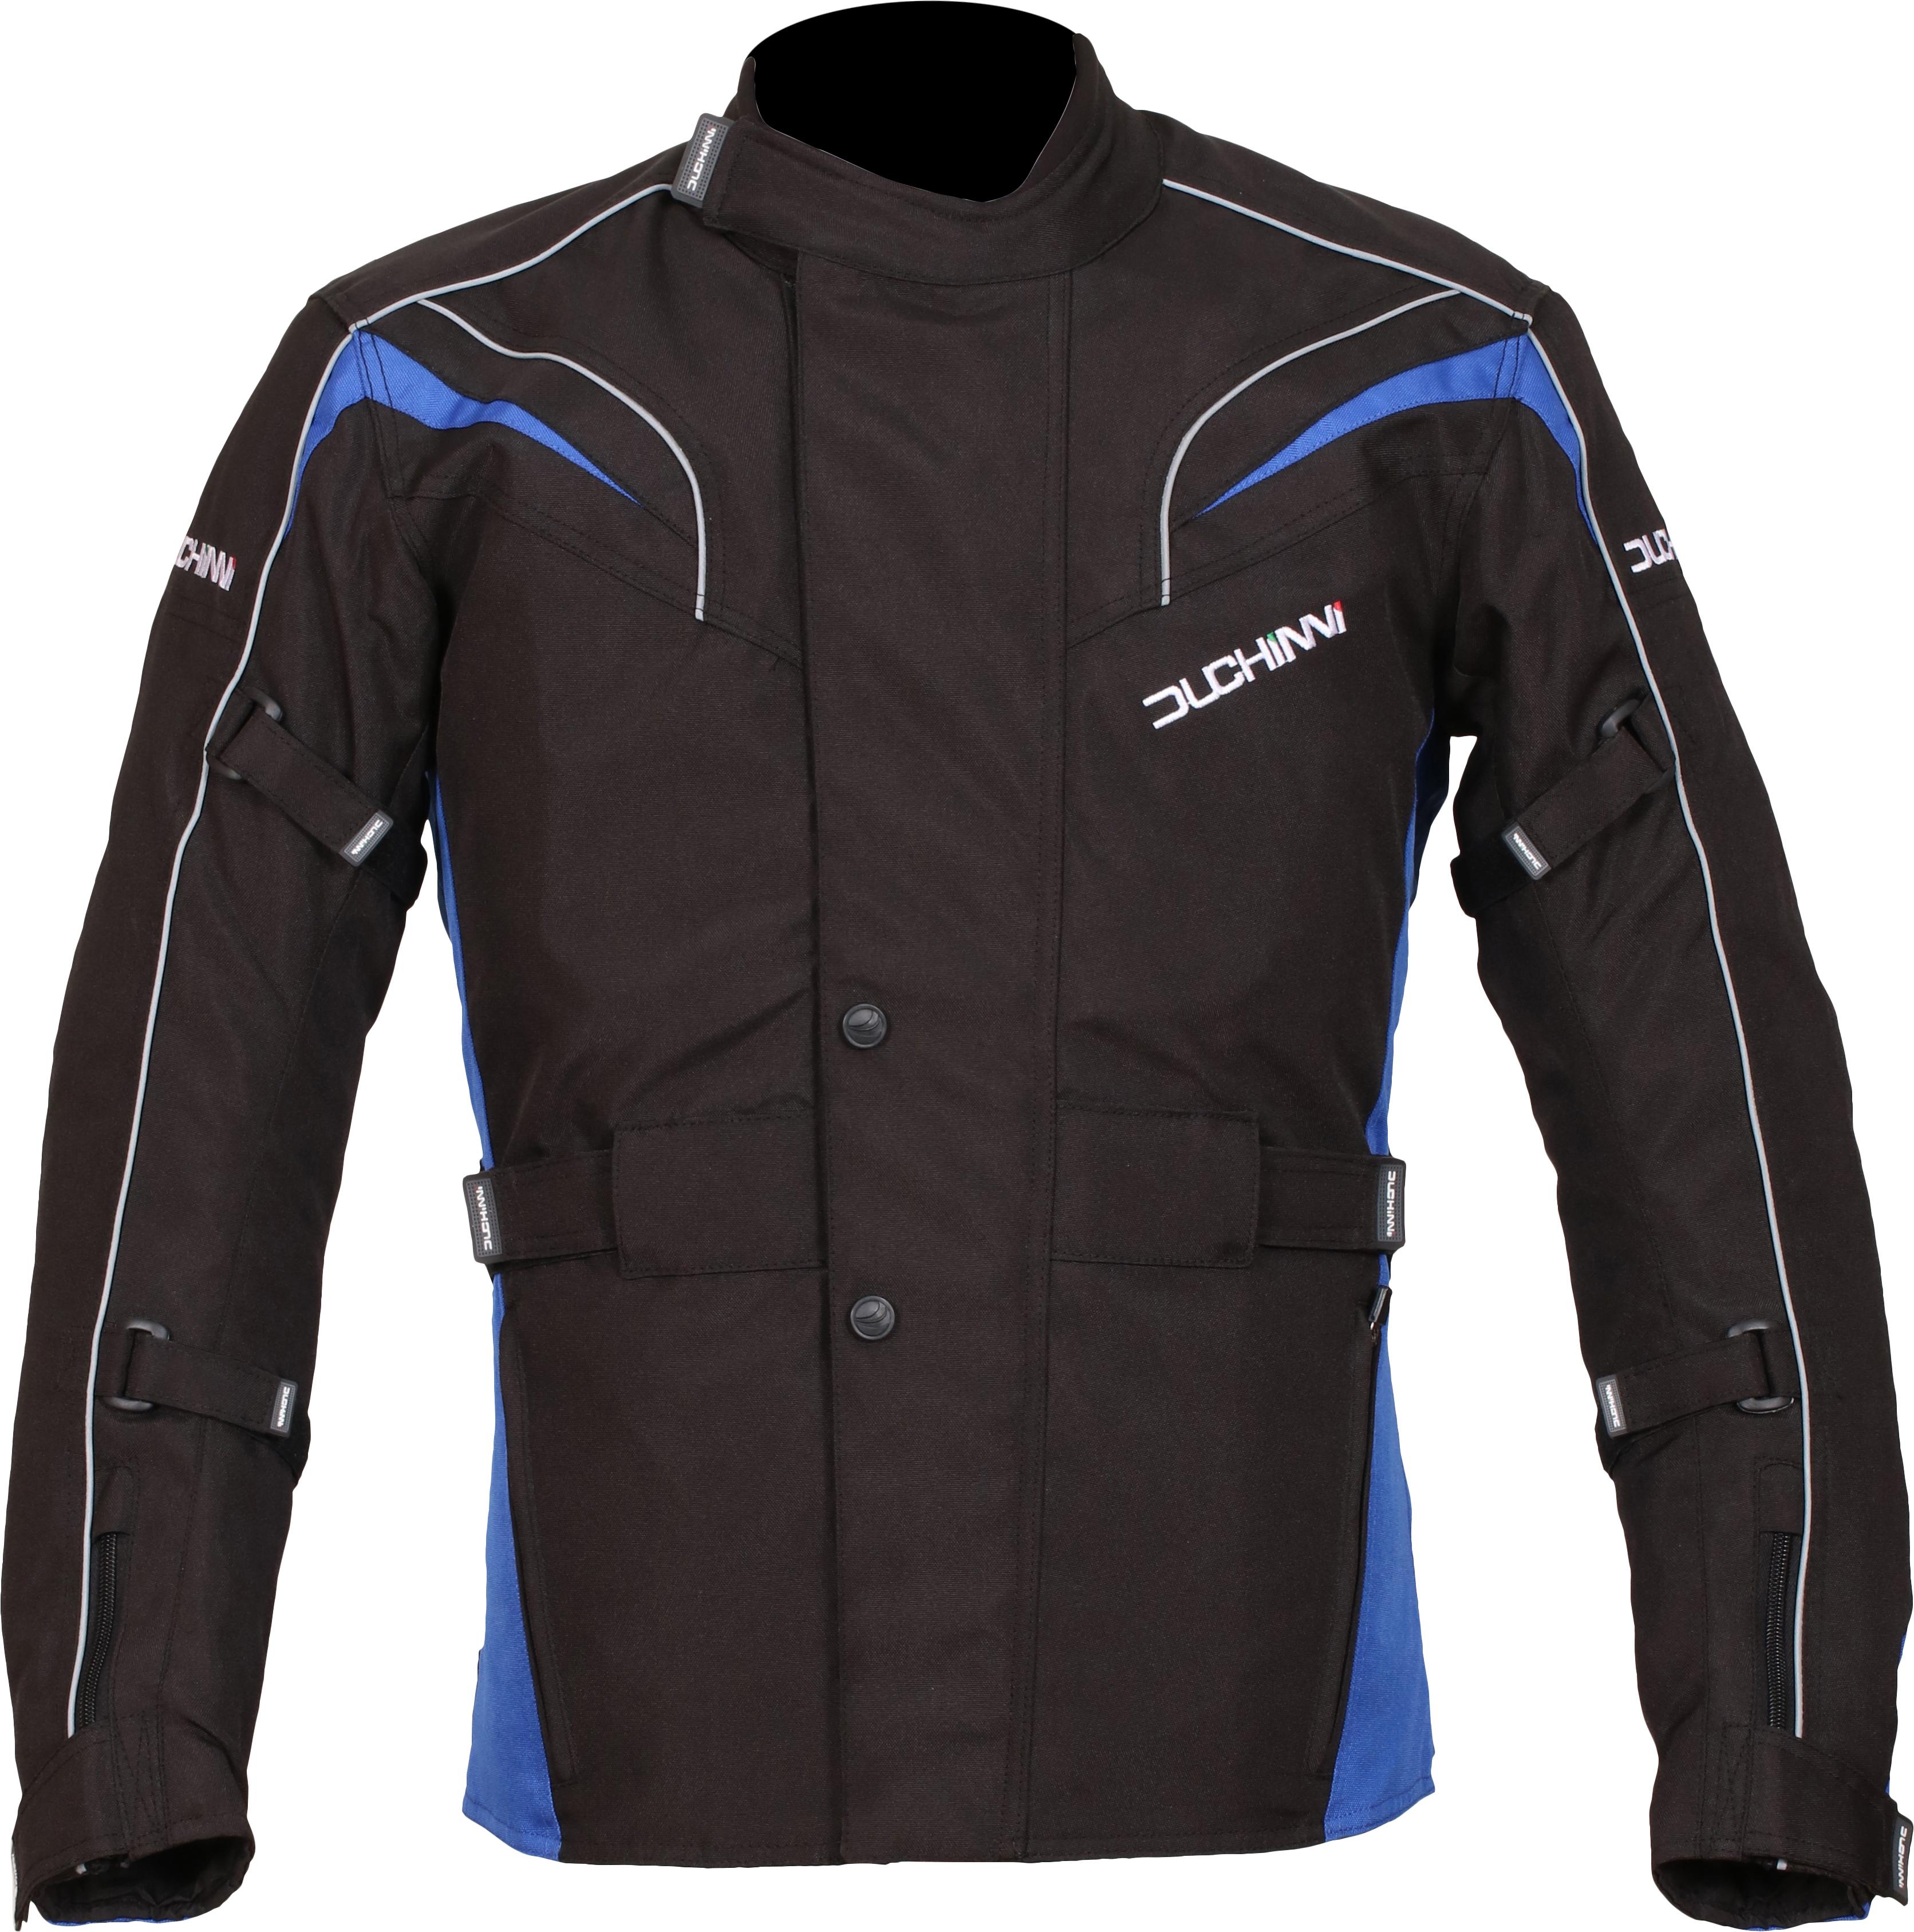 Duchinni Hurricane Motorcycle Jacket - Black And Blue, S